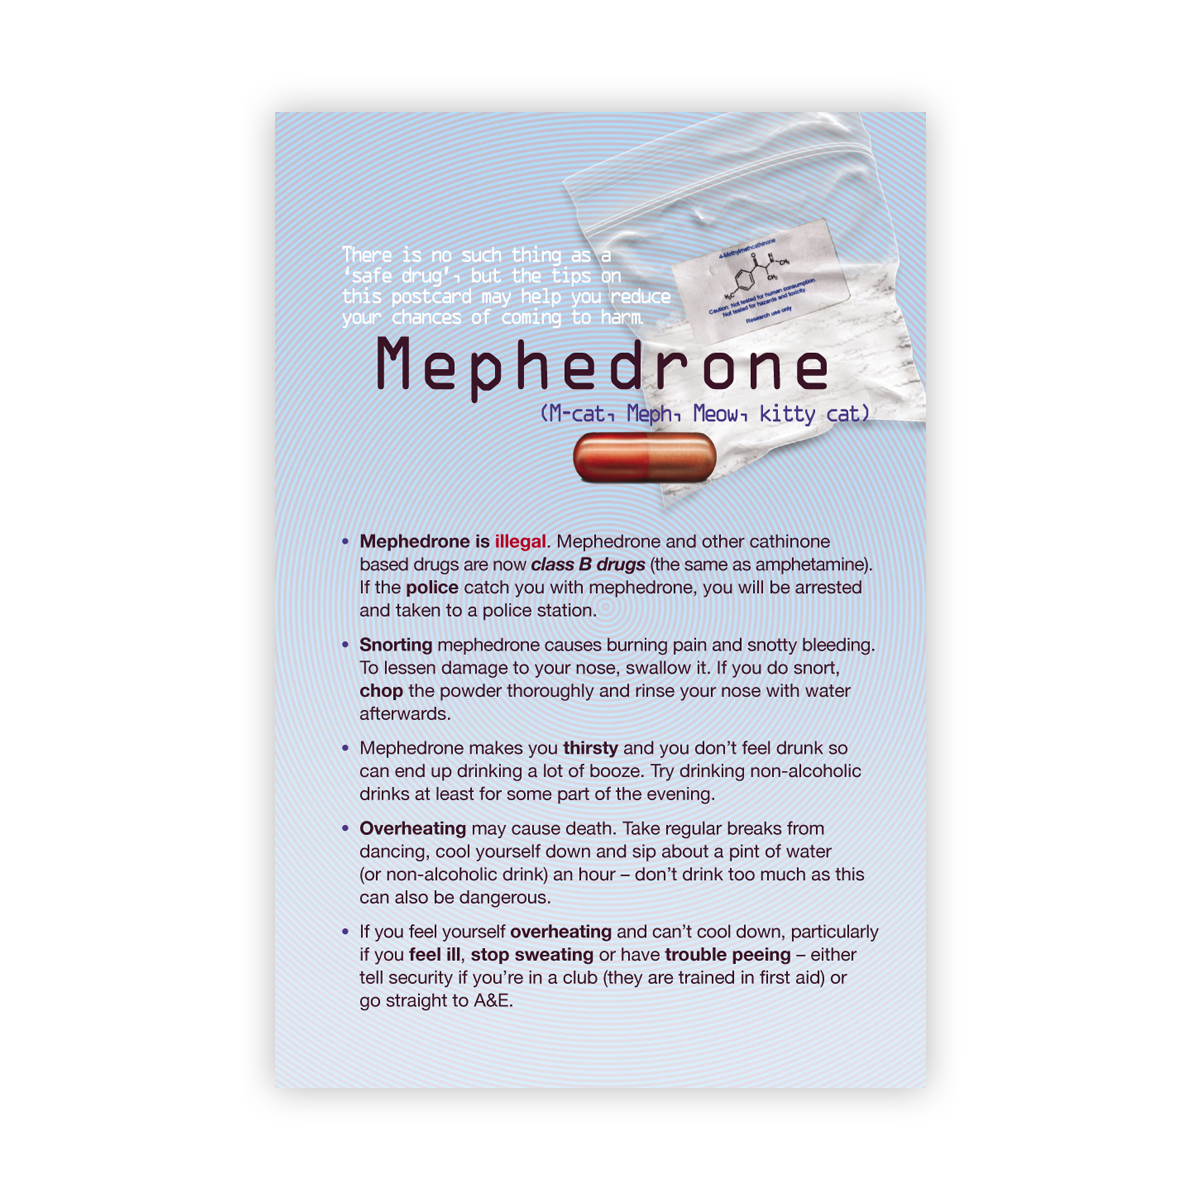 Mephedrone postcard